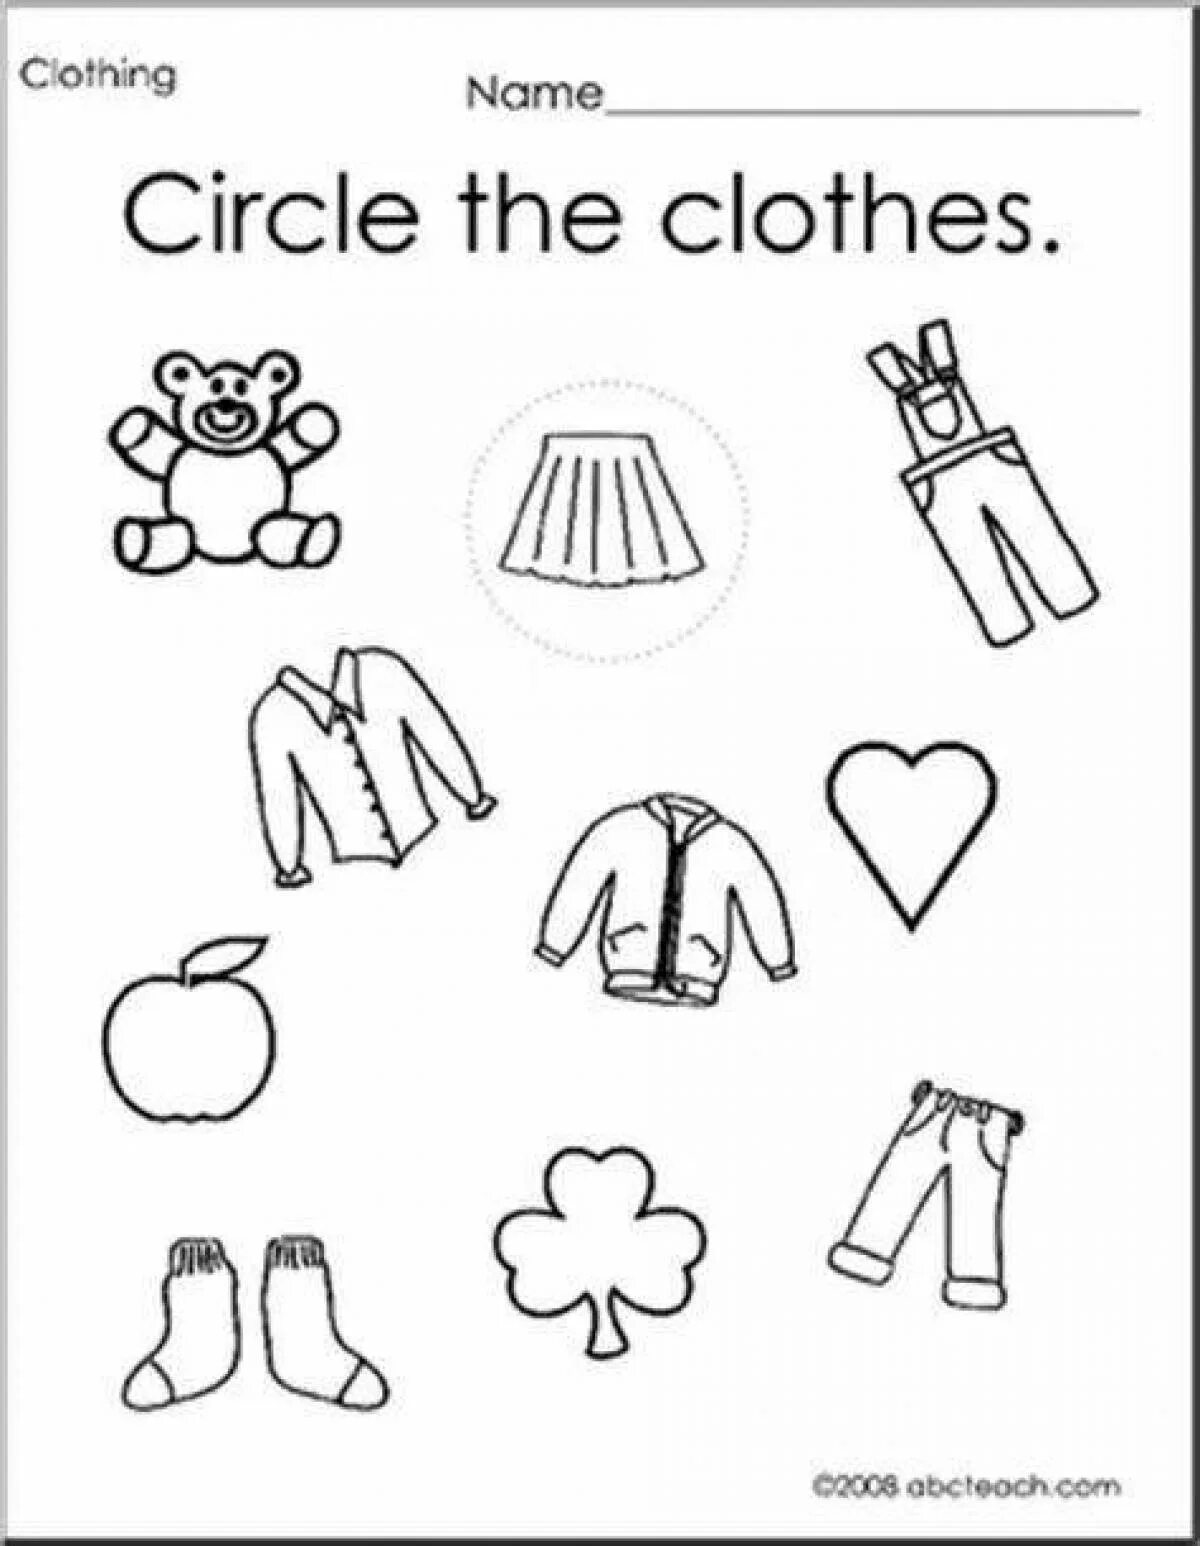 Clothes worksheets for kids. Задания по английскому для малышей одежда. Одежда на английском для детей задания. Одежда на английском для дошкольников задания. Задания на английском зимняя одежда.